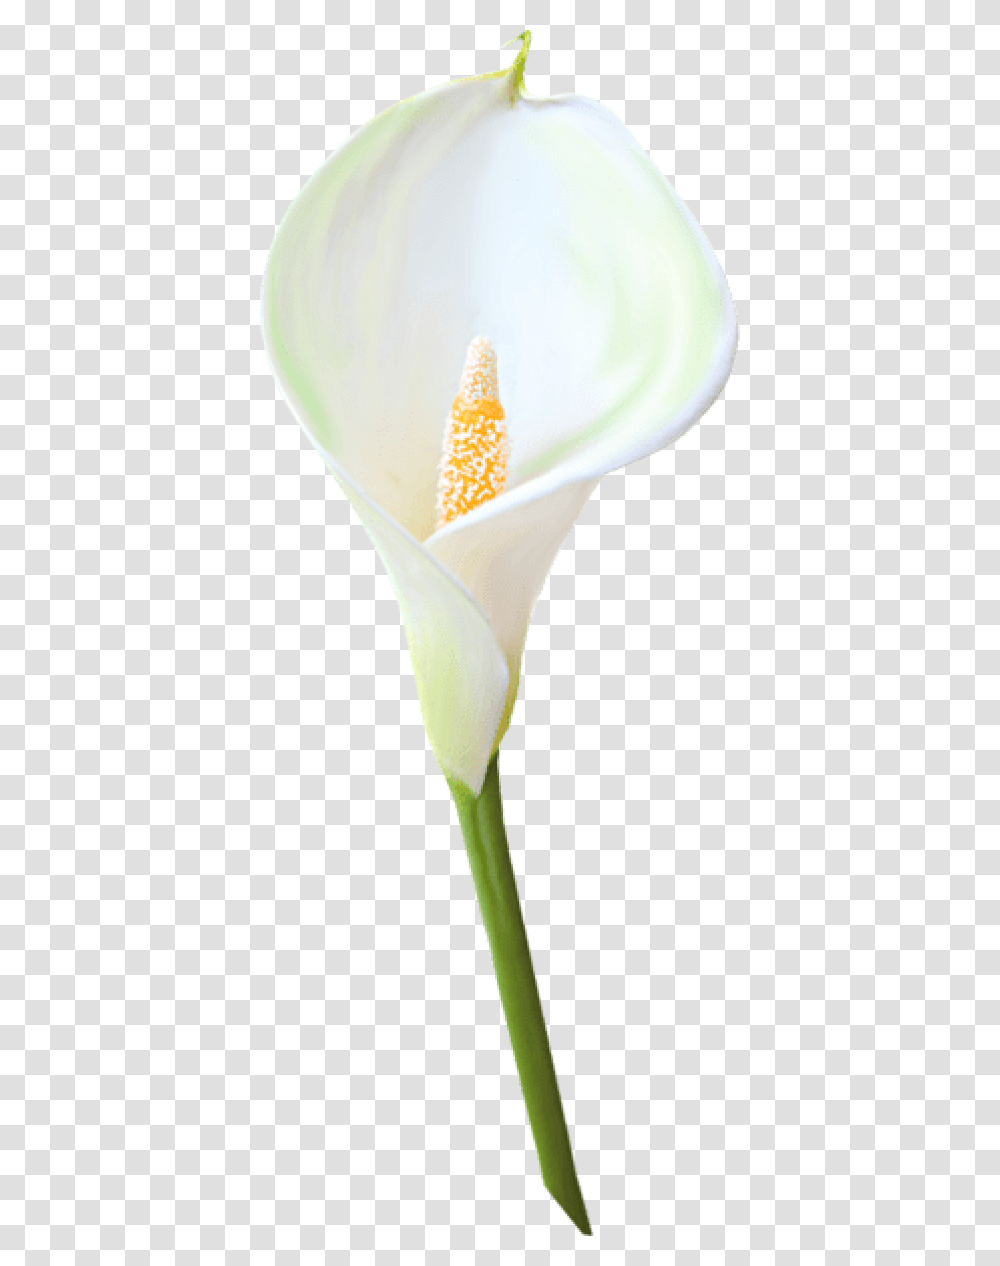 Calla Lily Flower Clipart Calla Lily Background, Plant, Blossom, Pollen, Araceae Transparent Png